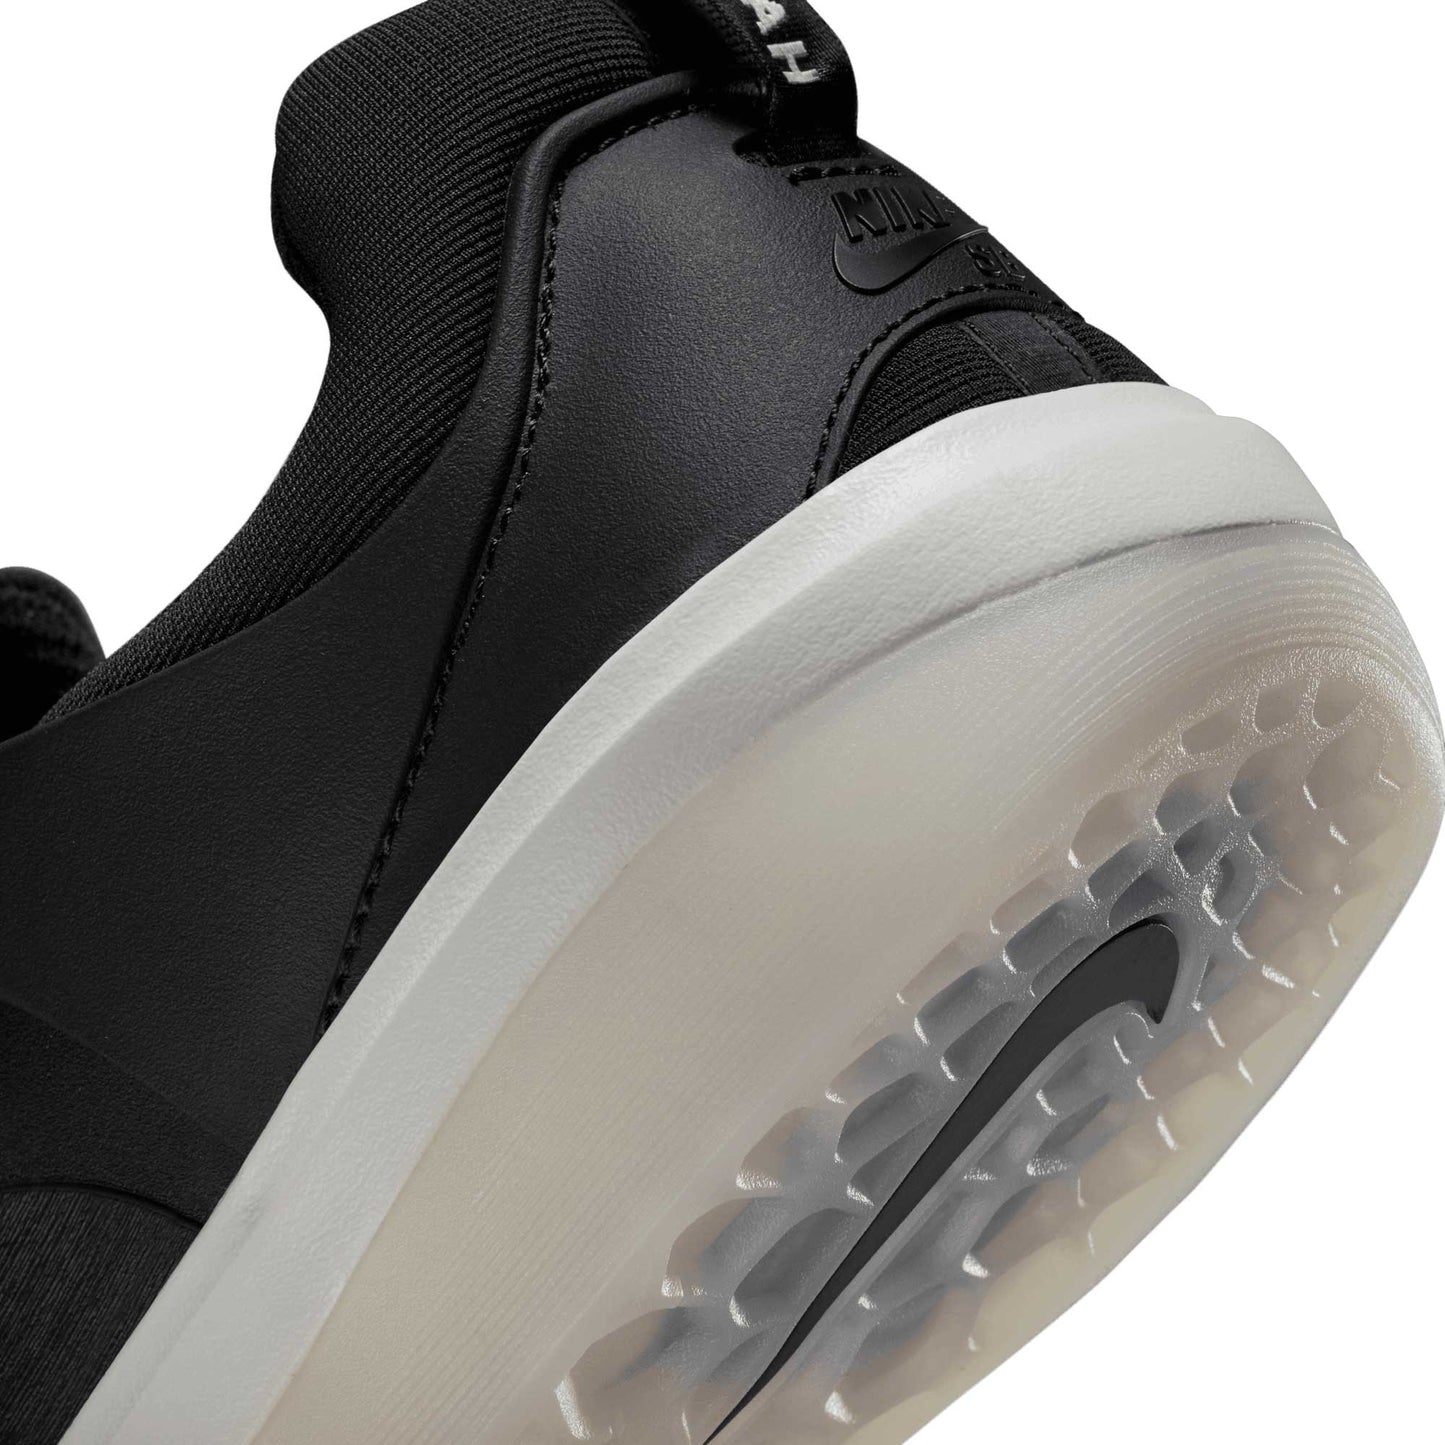 Nike SB Nyjah 3, black/white-black-summit white - Tiki Room Skateboards - 5